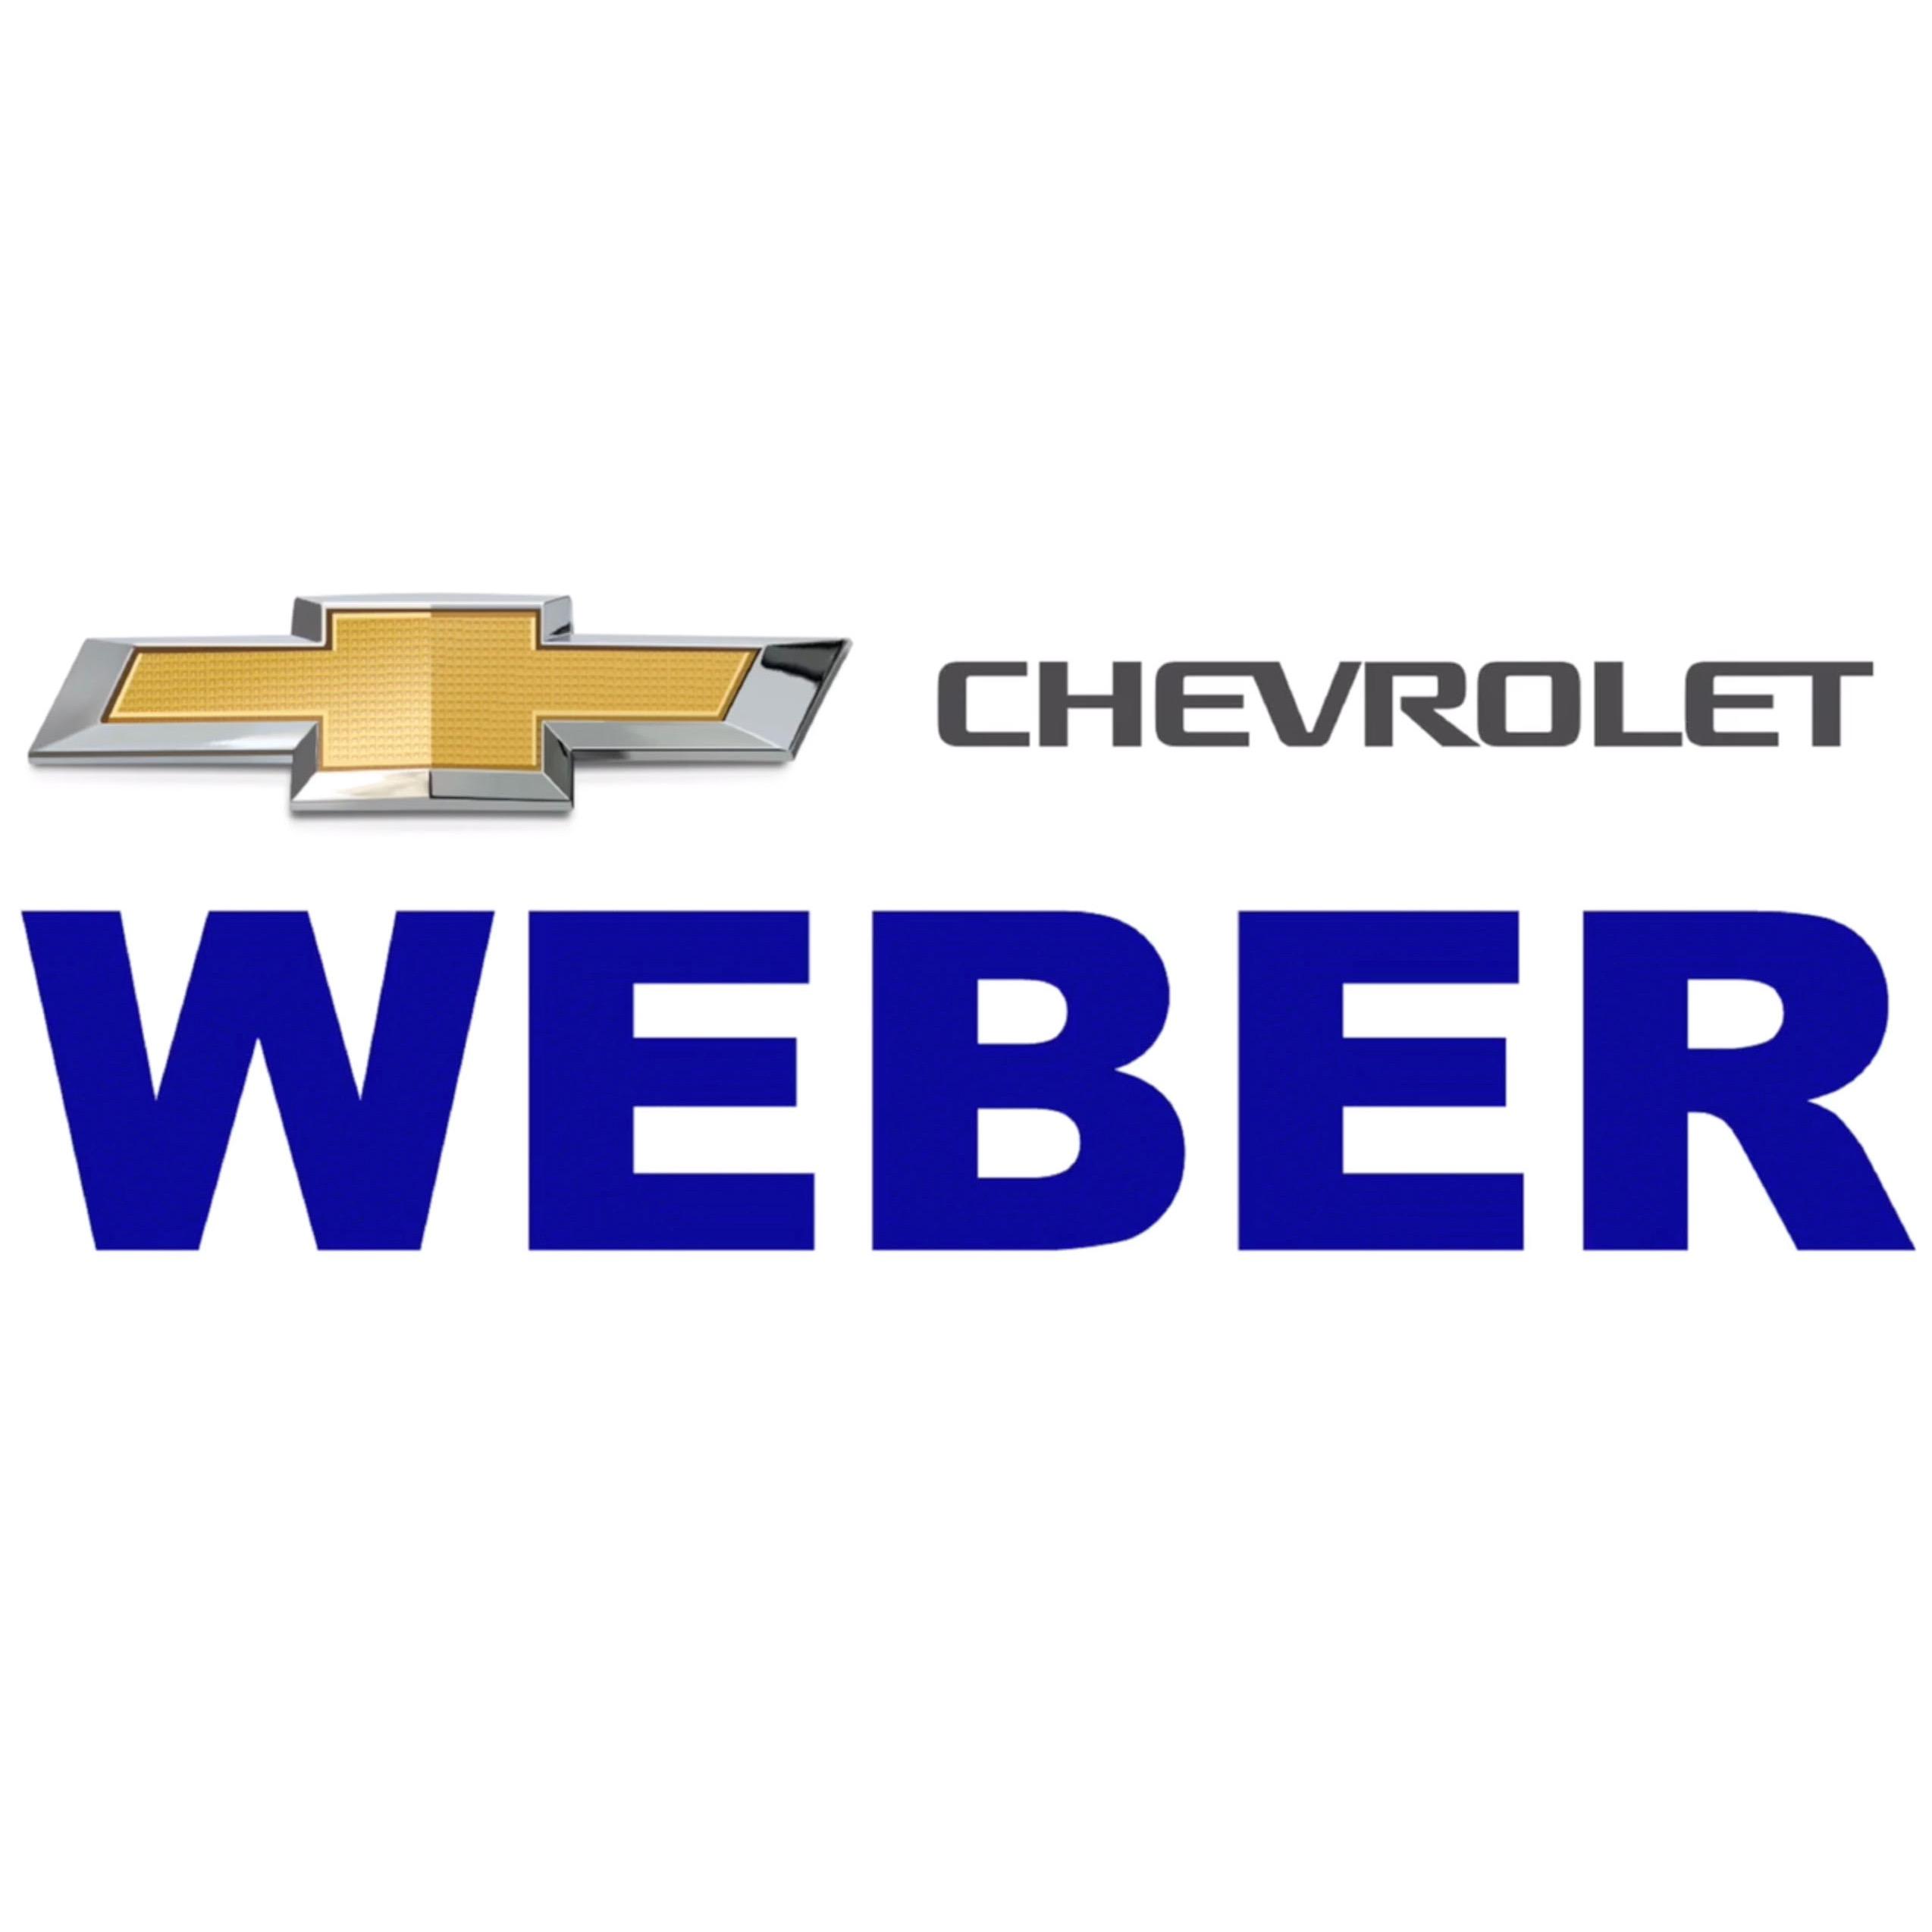 Weber Chevrolet Columbia - Columbia, IL 62236 - (618)281-5111 | ShowMeLocal.com